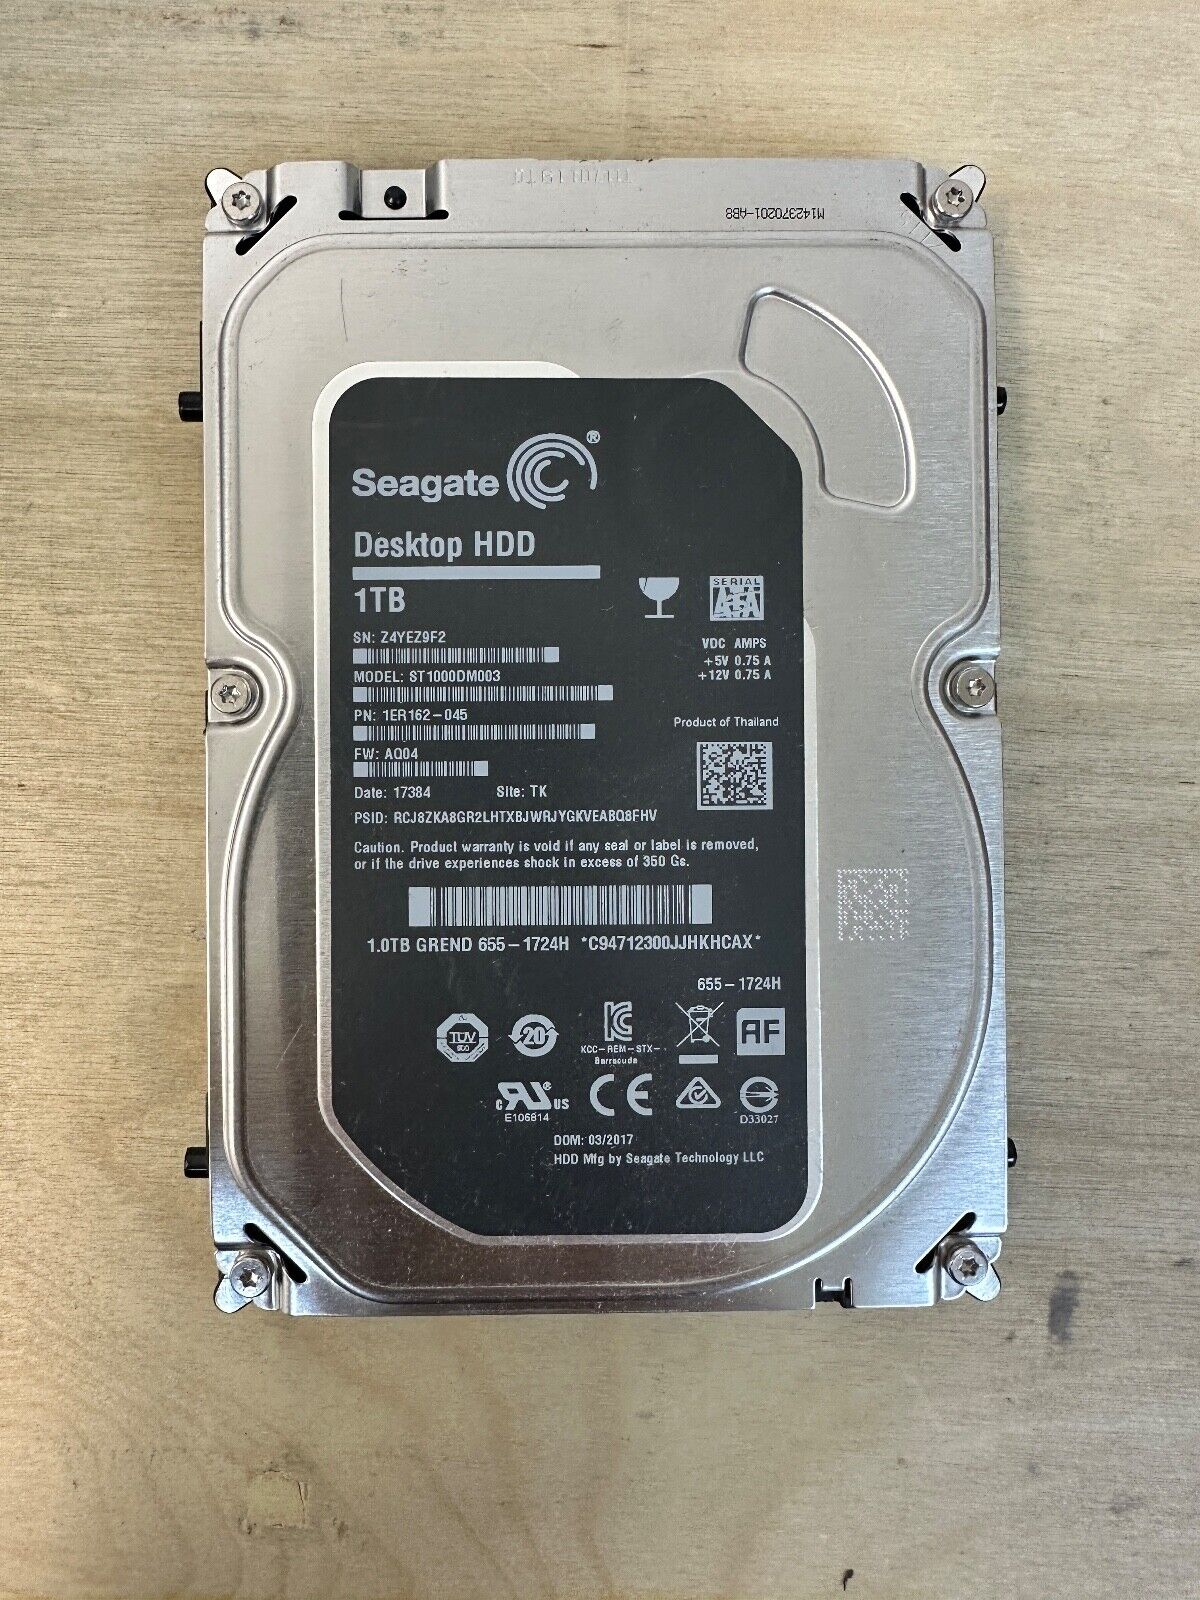 Seagate 1TB ST1000DM003 1ER162-045 64MB 7200RPM Desktop HDD